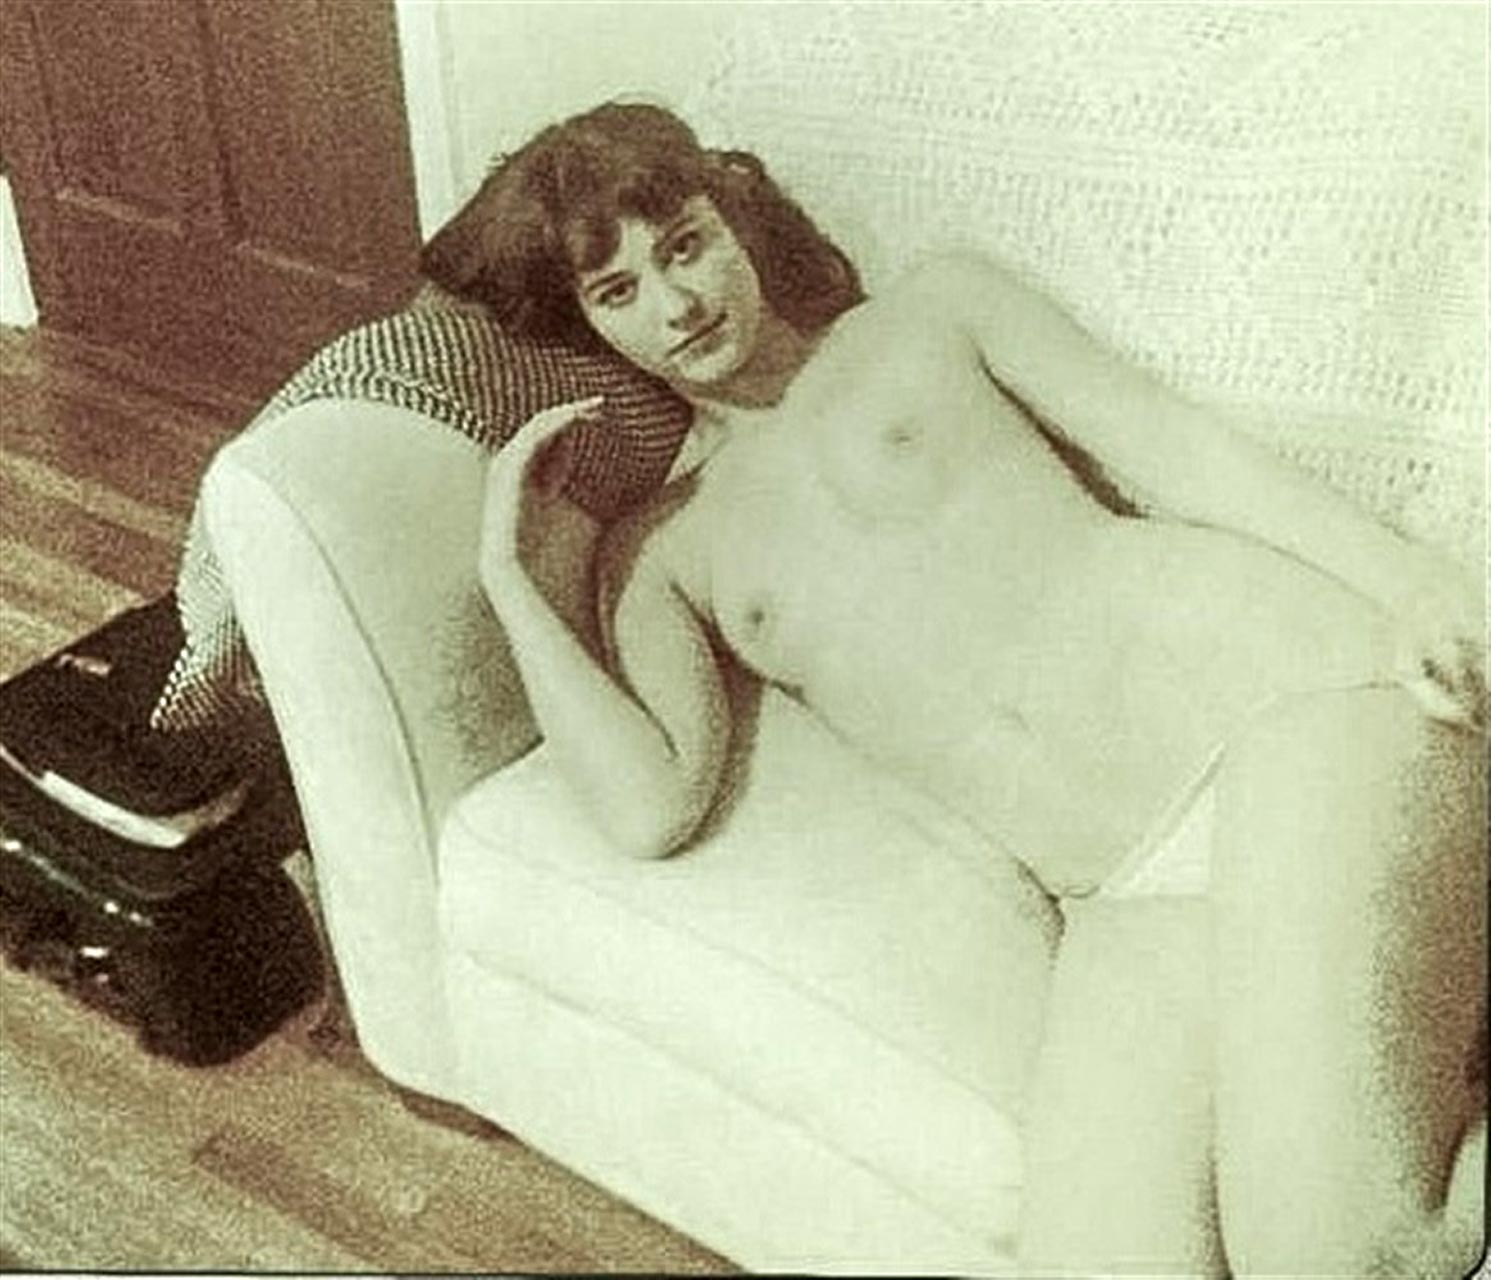 Mary Elizabeth Winstead Nude Leaked Pics And Sex Scenes